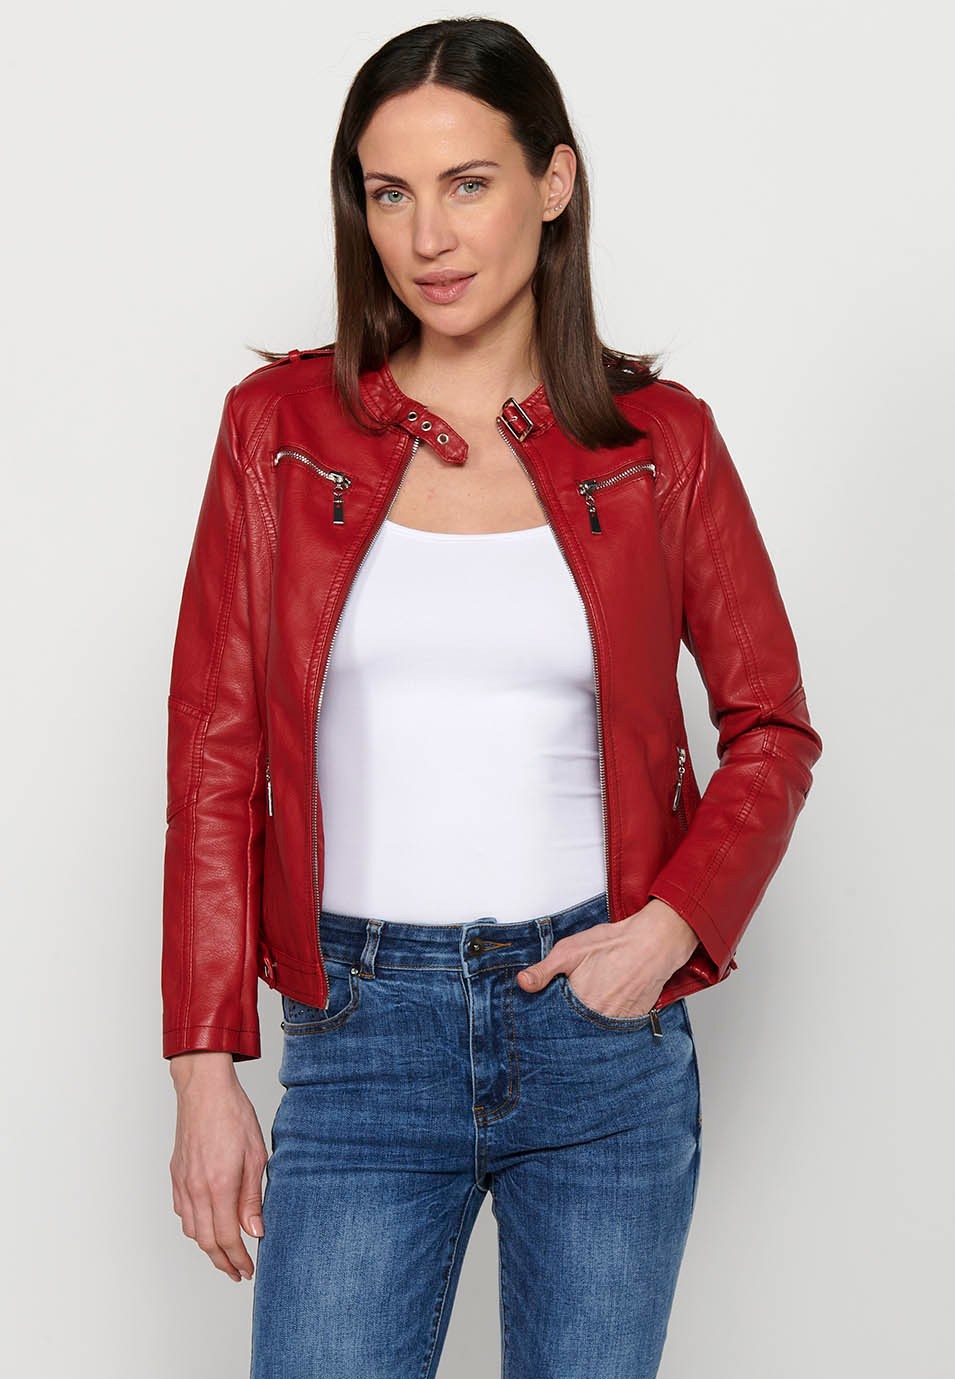 Long sleeve jacket, mandarin collar, red color for women